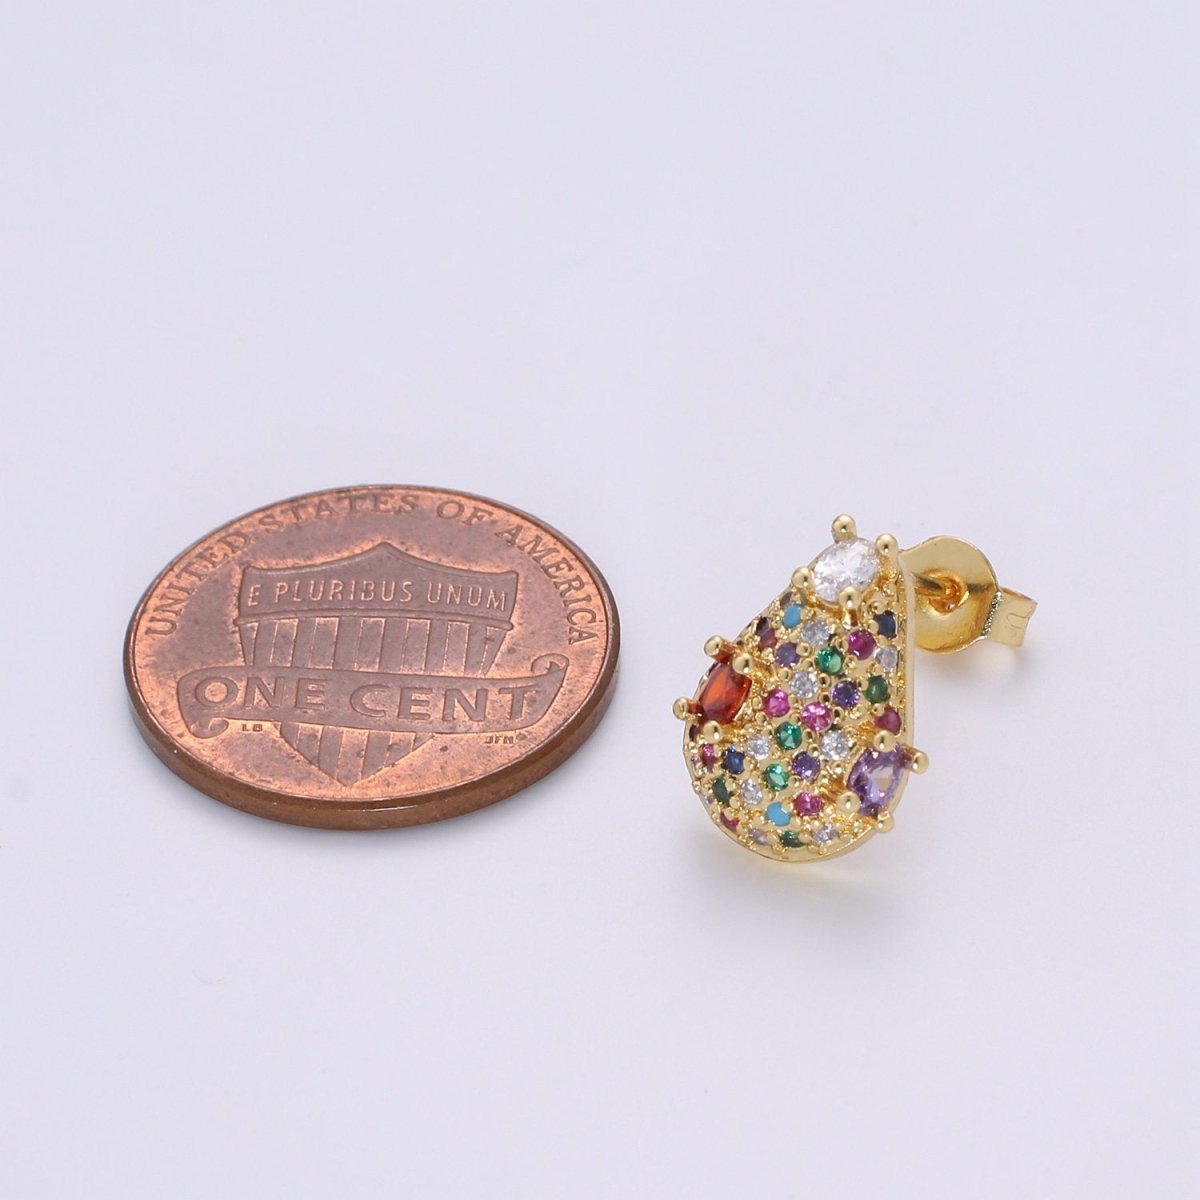 Multi Color Gold Tiny Stud Earrings - Rainbow Micro Pave Studs - Dainty CZ Studs 10mm Tear Drop Crystal Small Stud Earrings Q-311 - DLUXCA